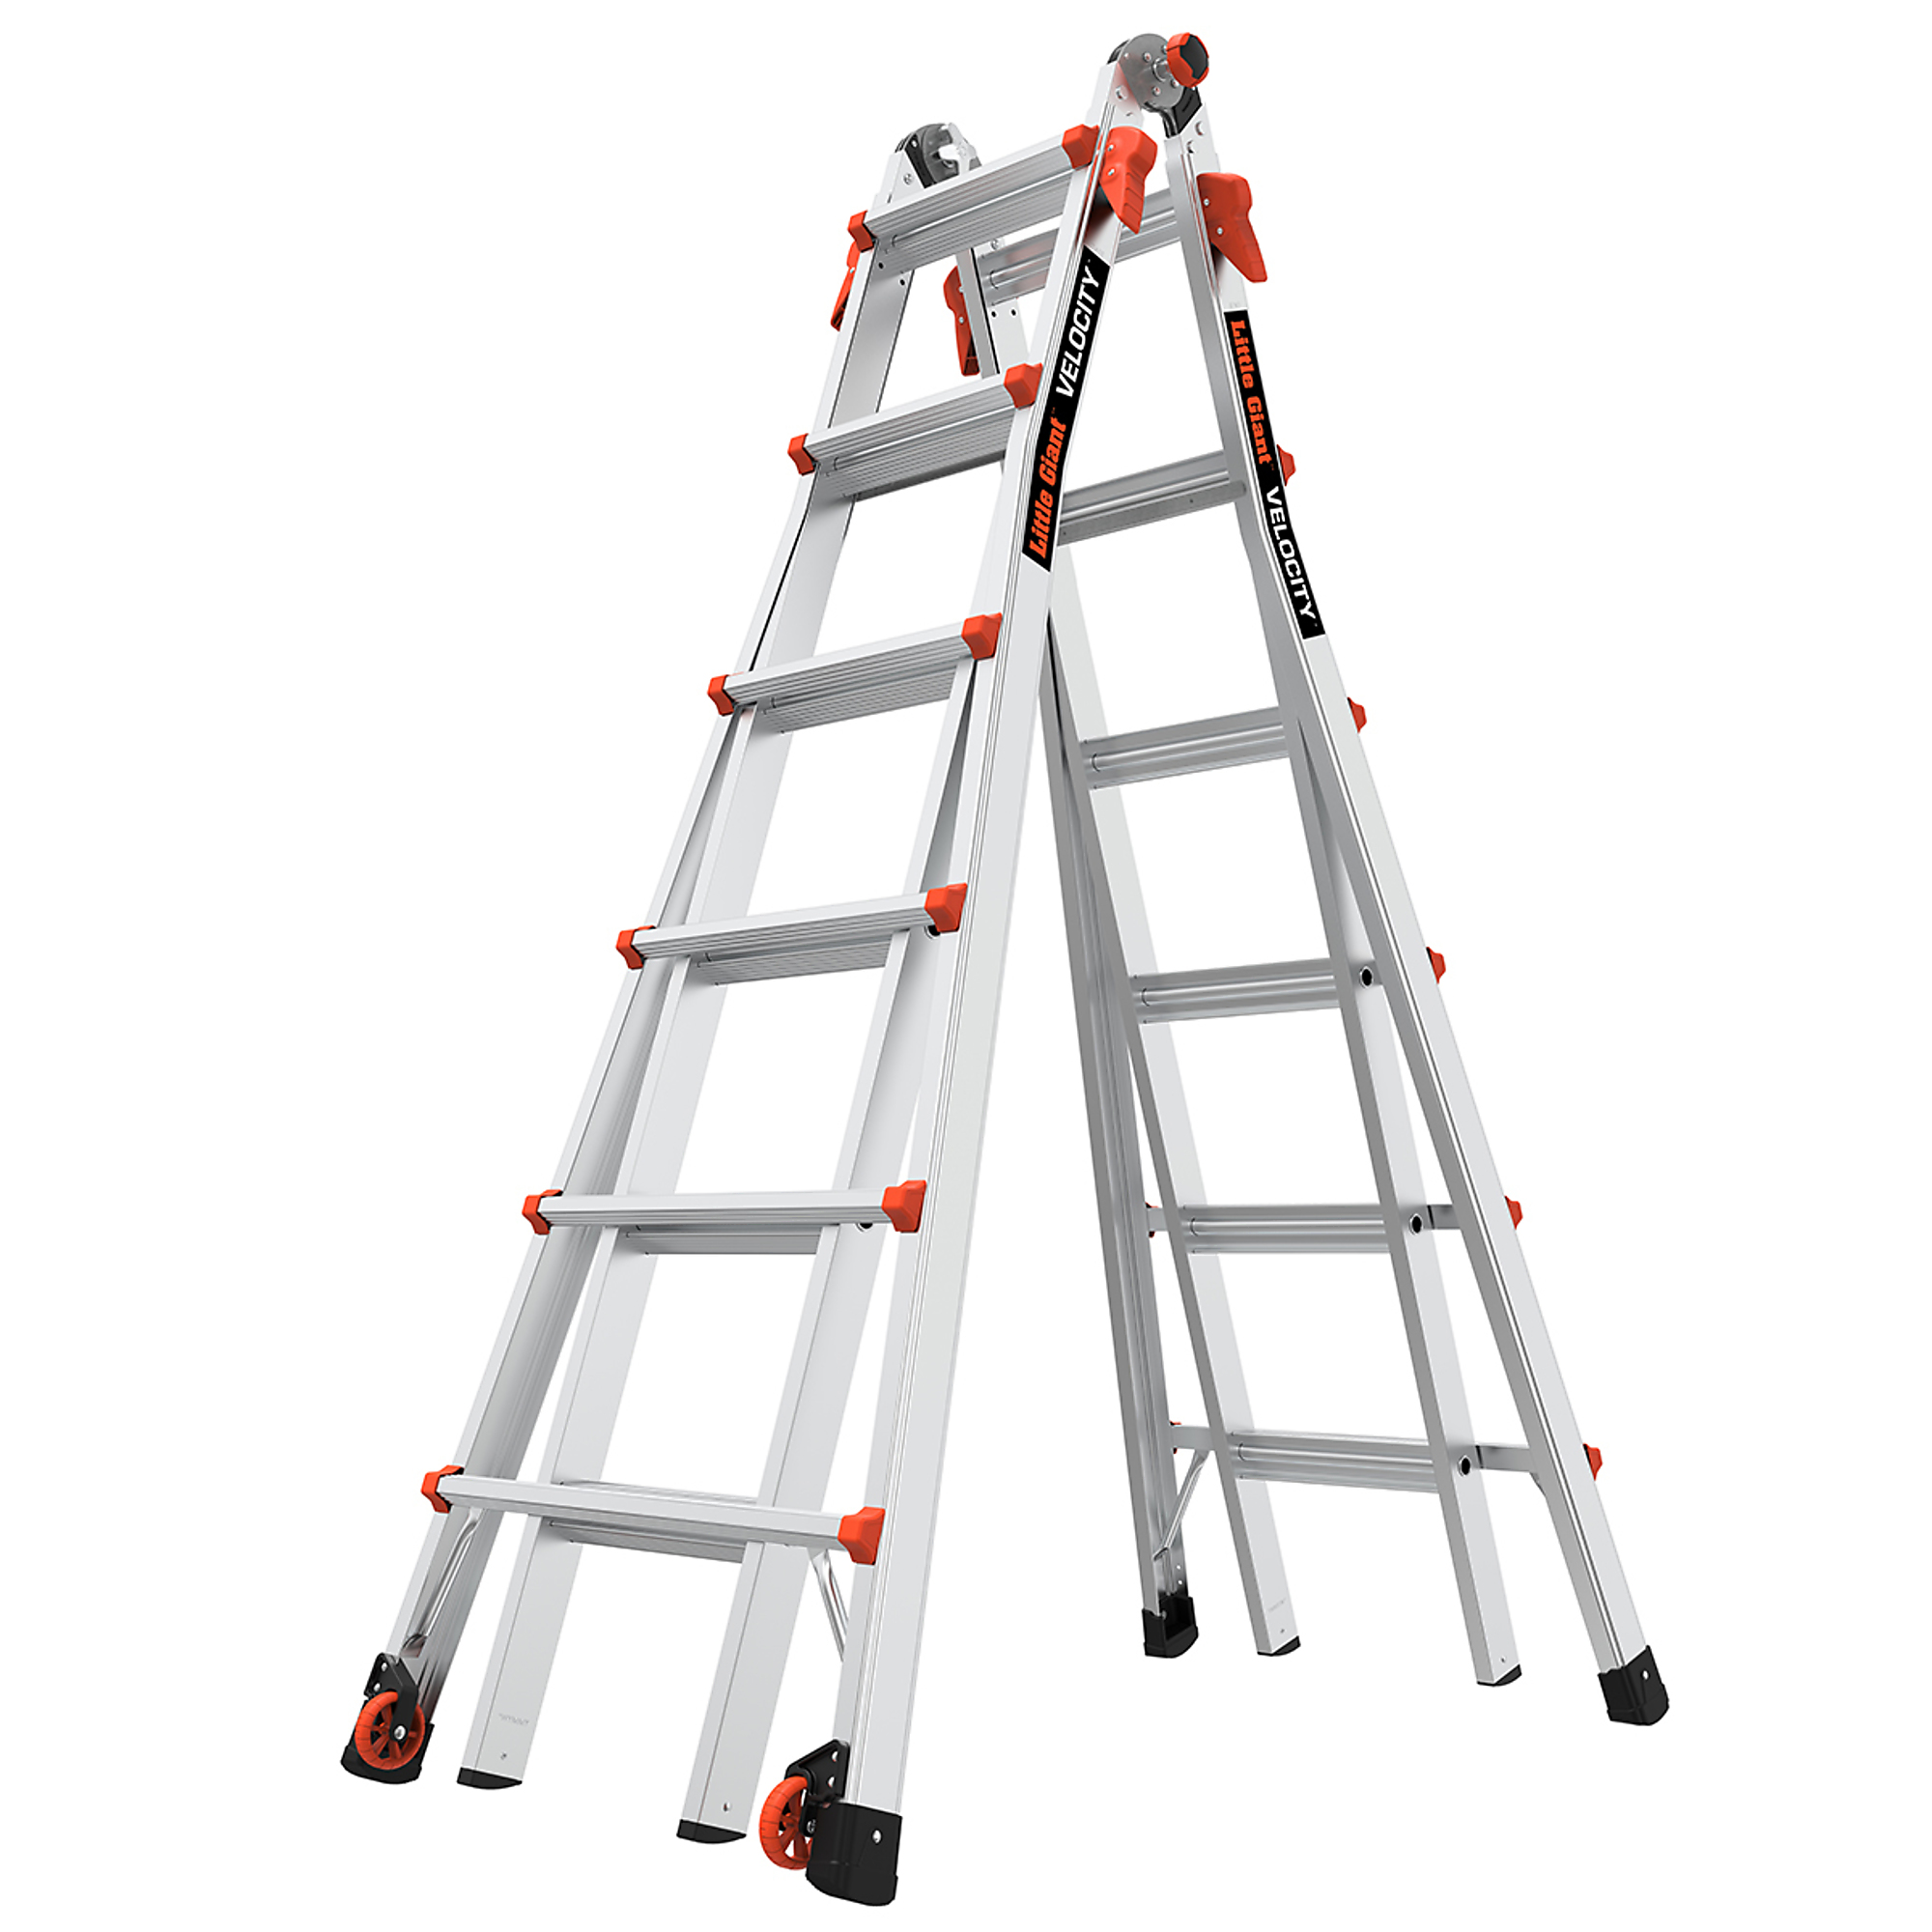 VELOCITY 26 Alum Articulated Extend Ladder, Height 26 ft, Capacity 300 lb, Material Aluminum, Model - Little Giant Ladder 15426-001